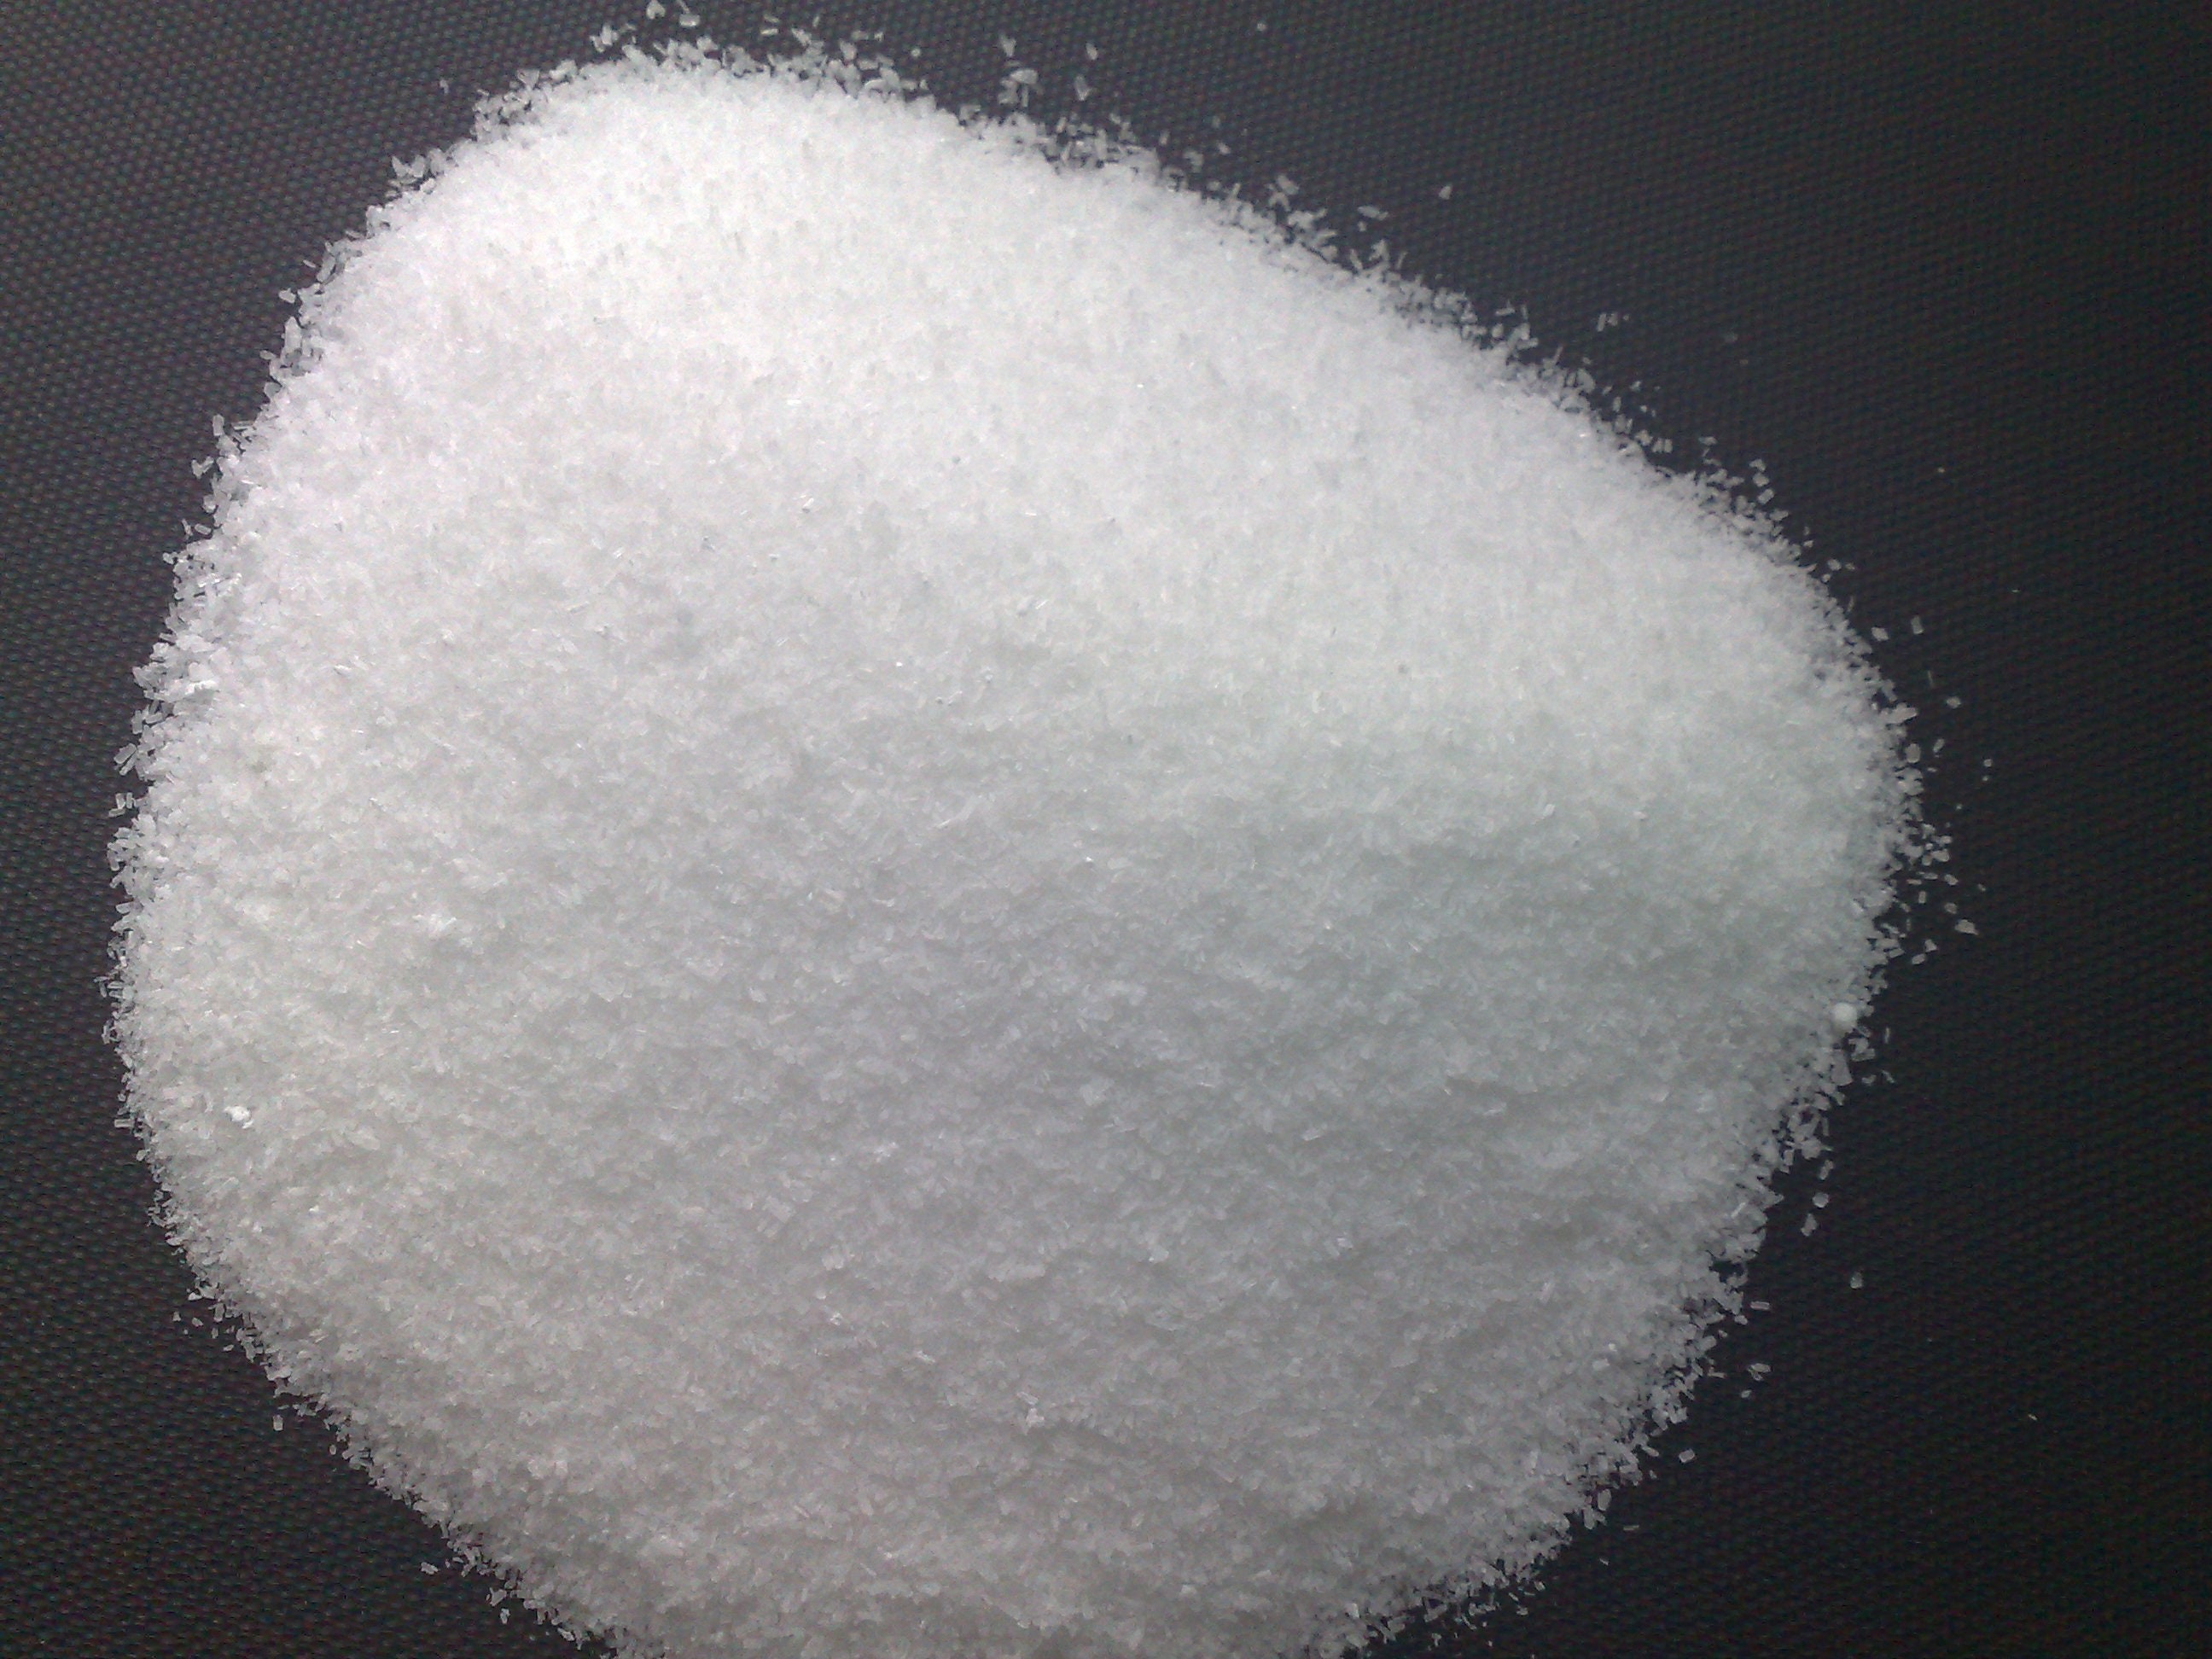 Sodium Hydroxide Caustic Soda 99% Pure lab chemical E524 Lye 100g for soap  making etc